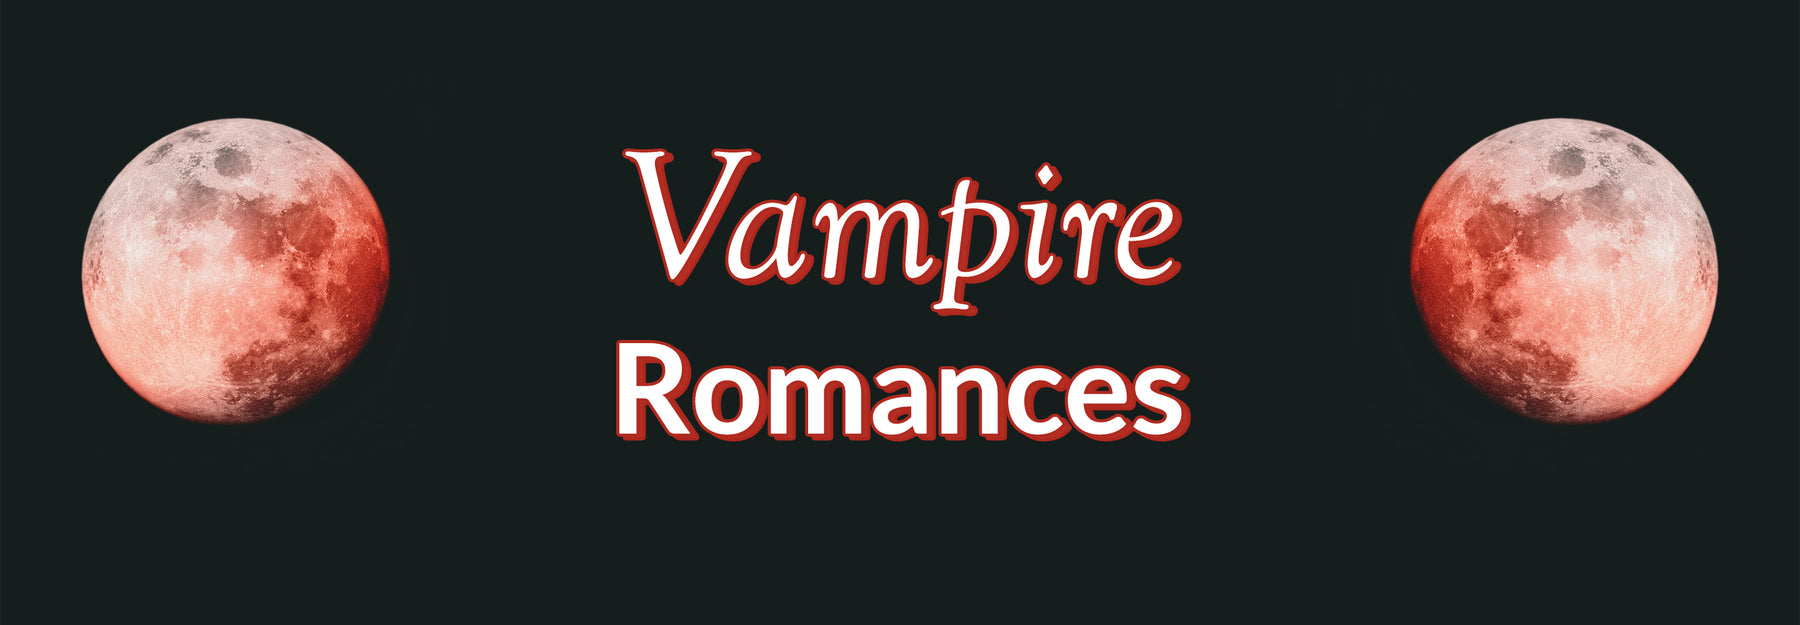 Vampire Romance Recommendations